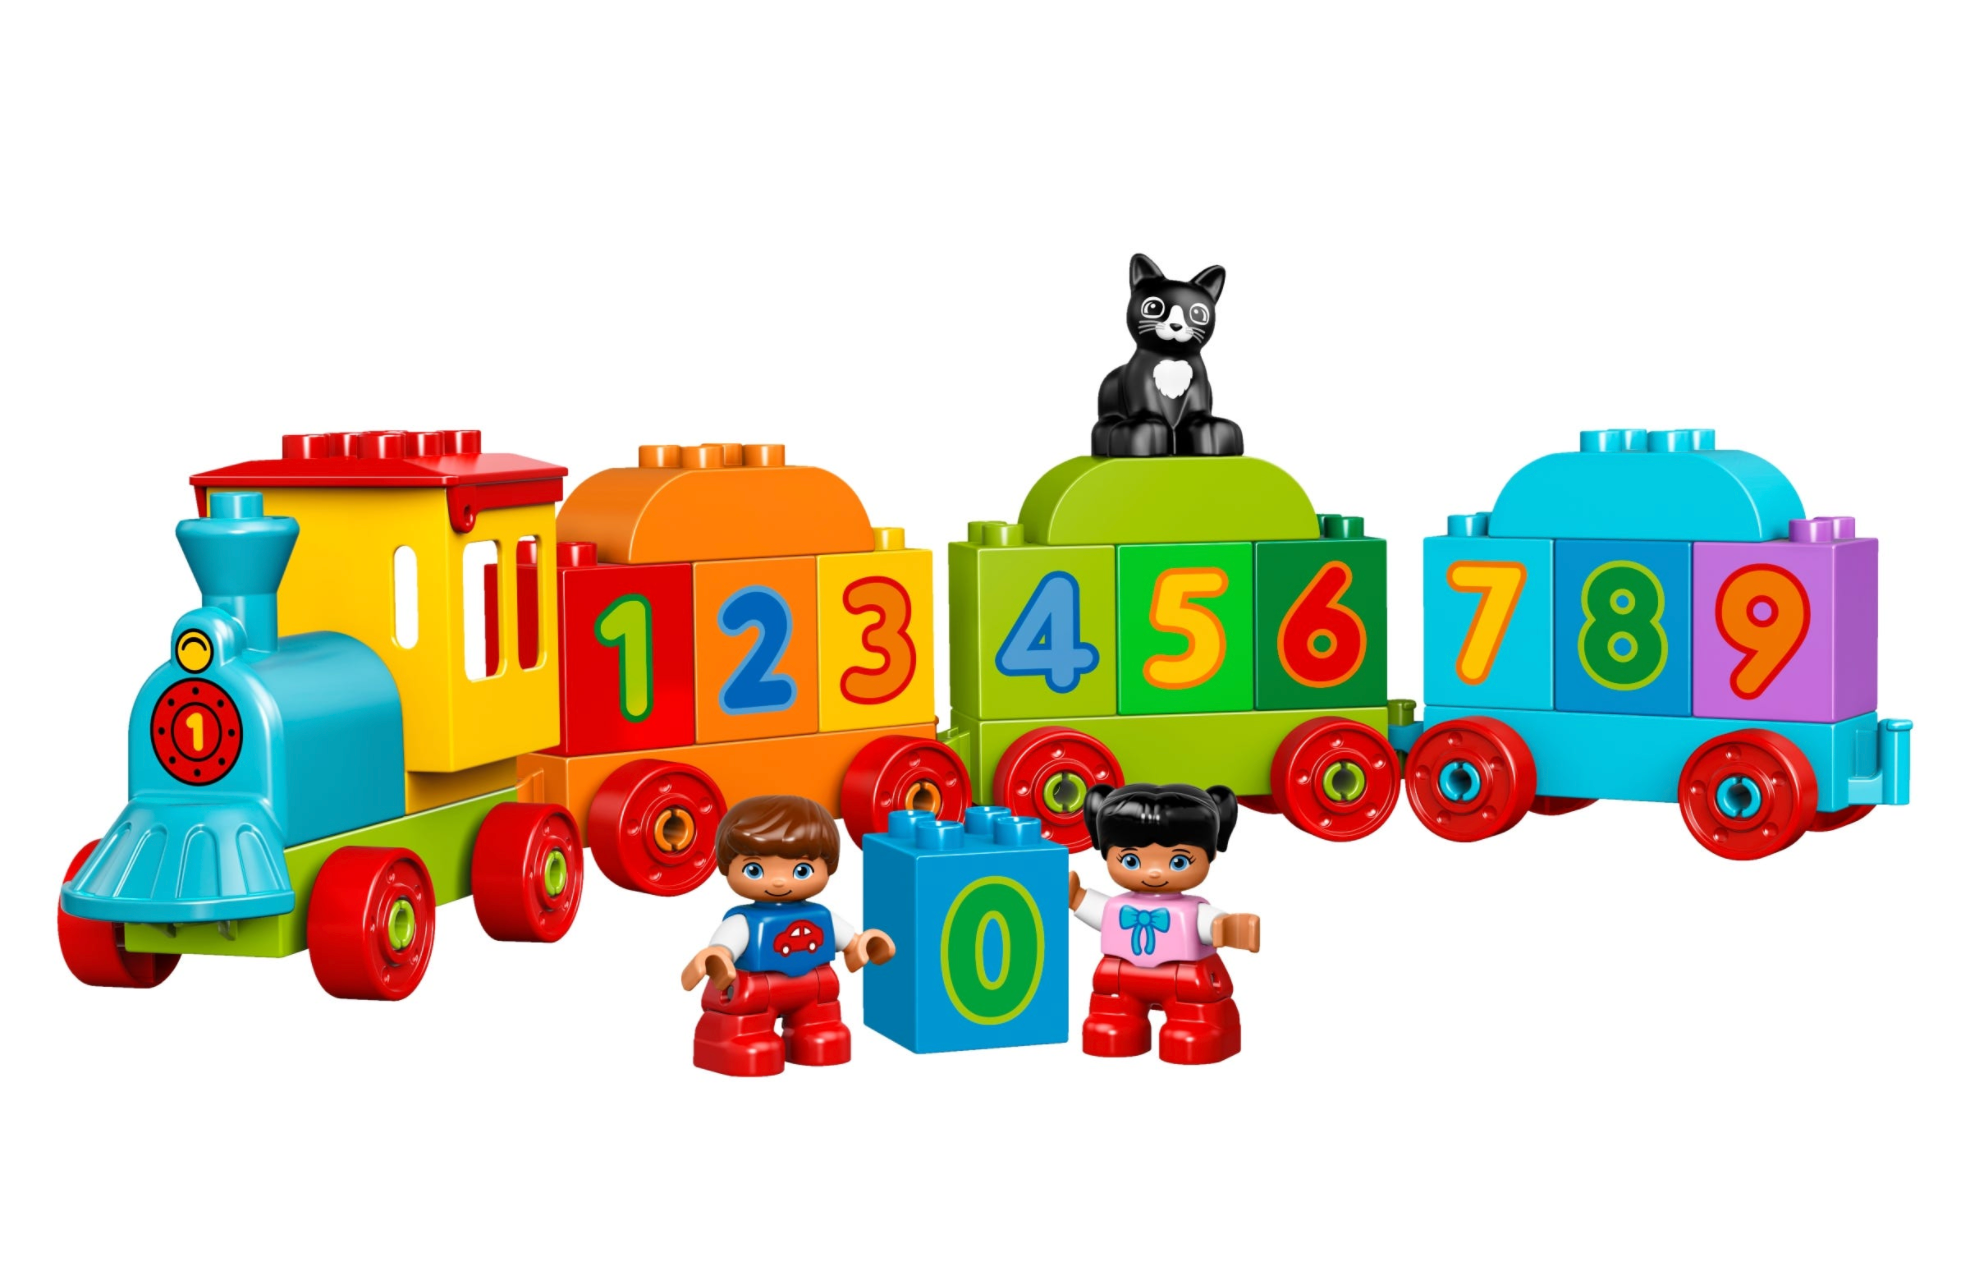 LEGO: DUPLO - Number Train